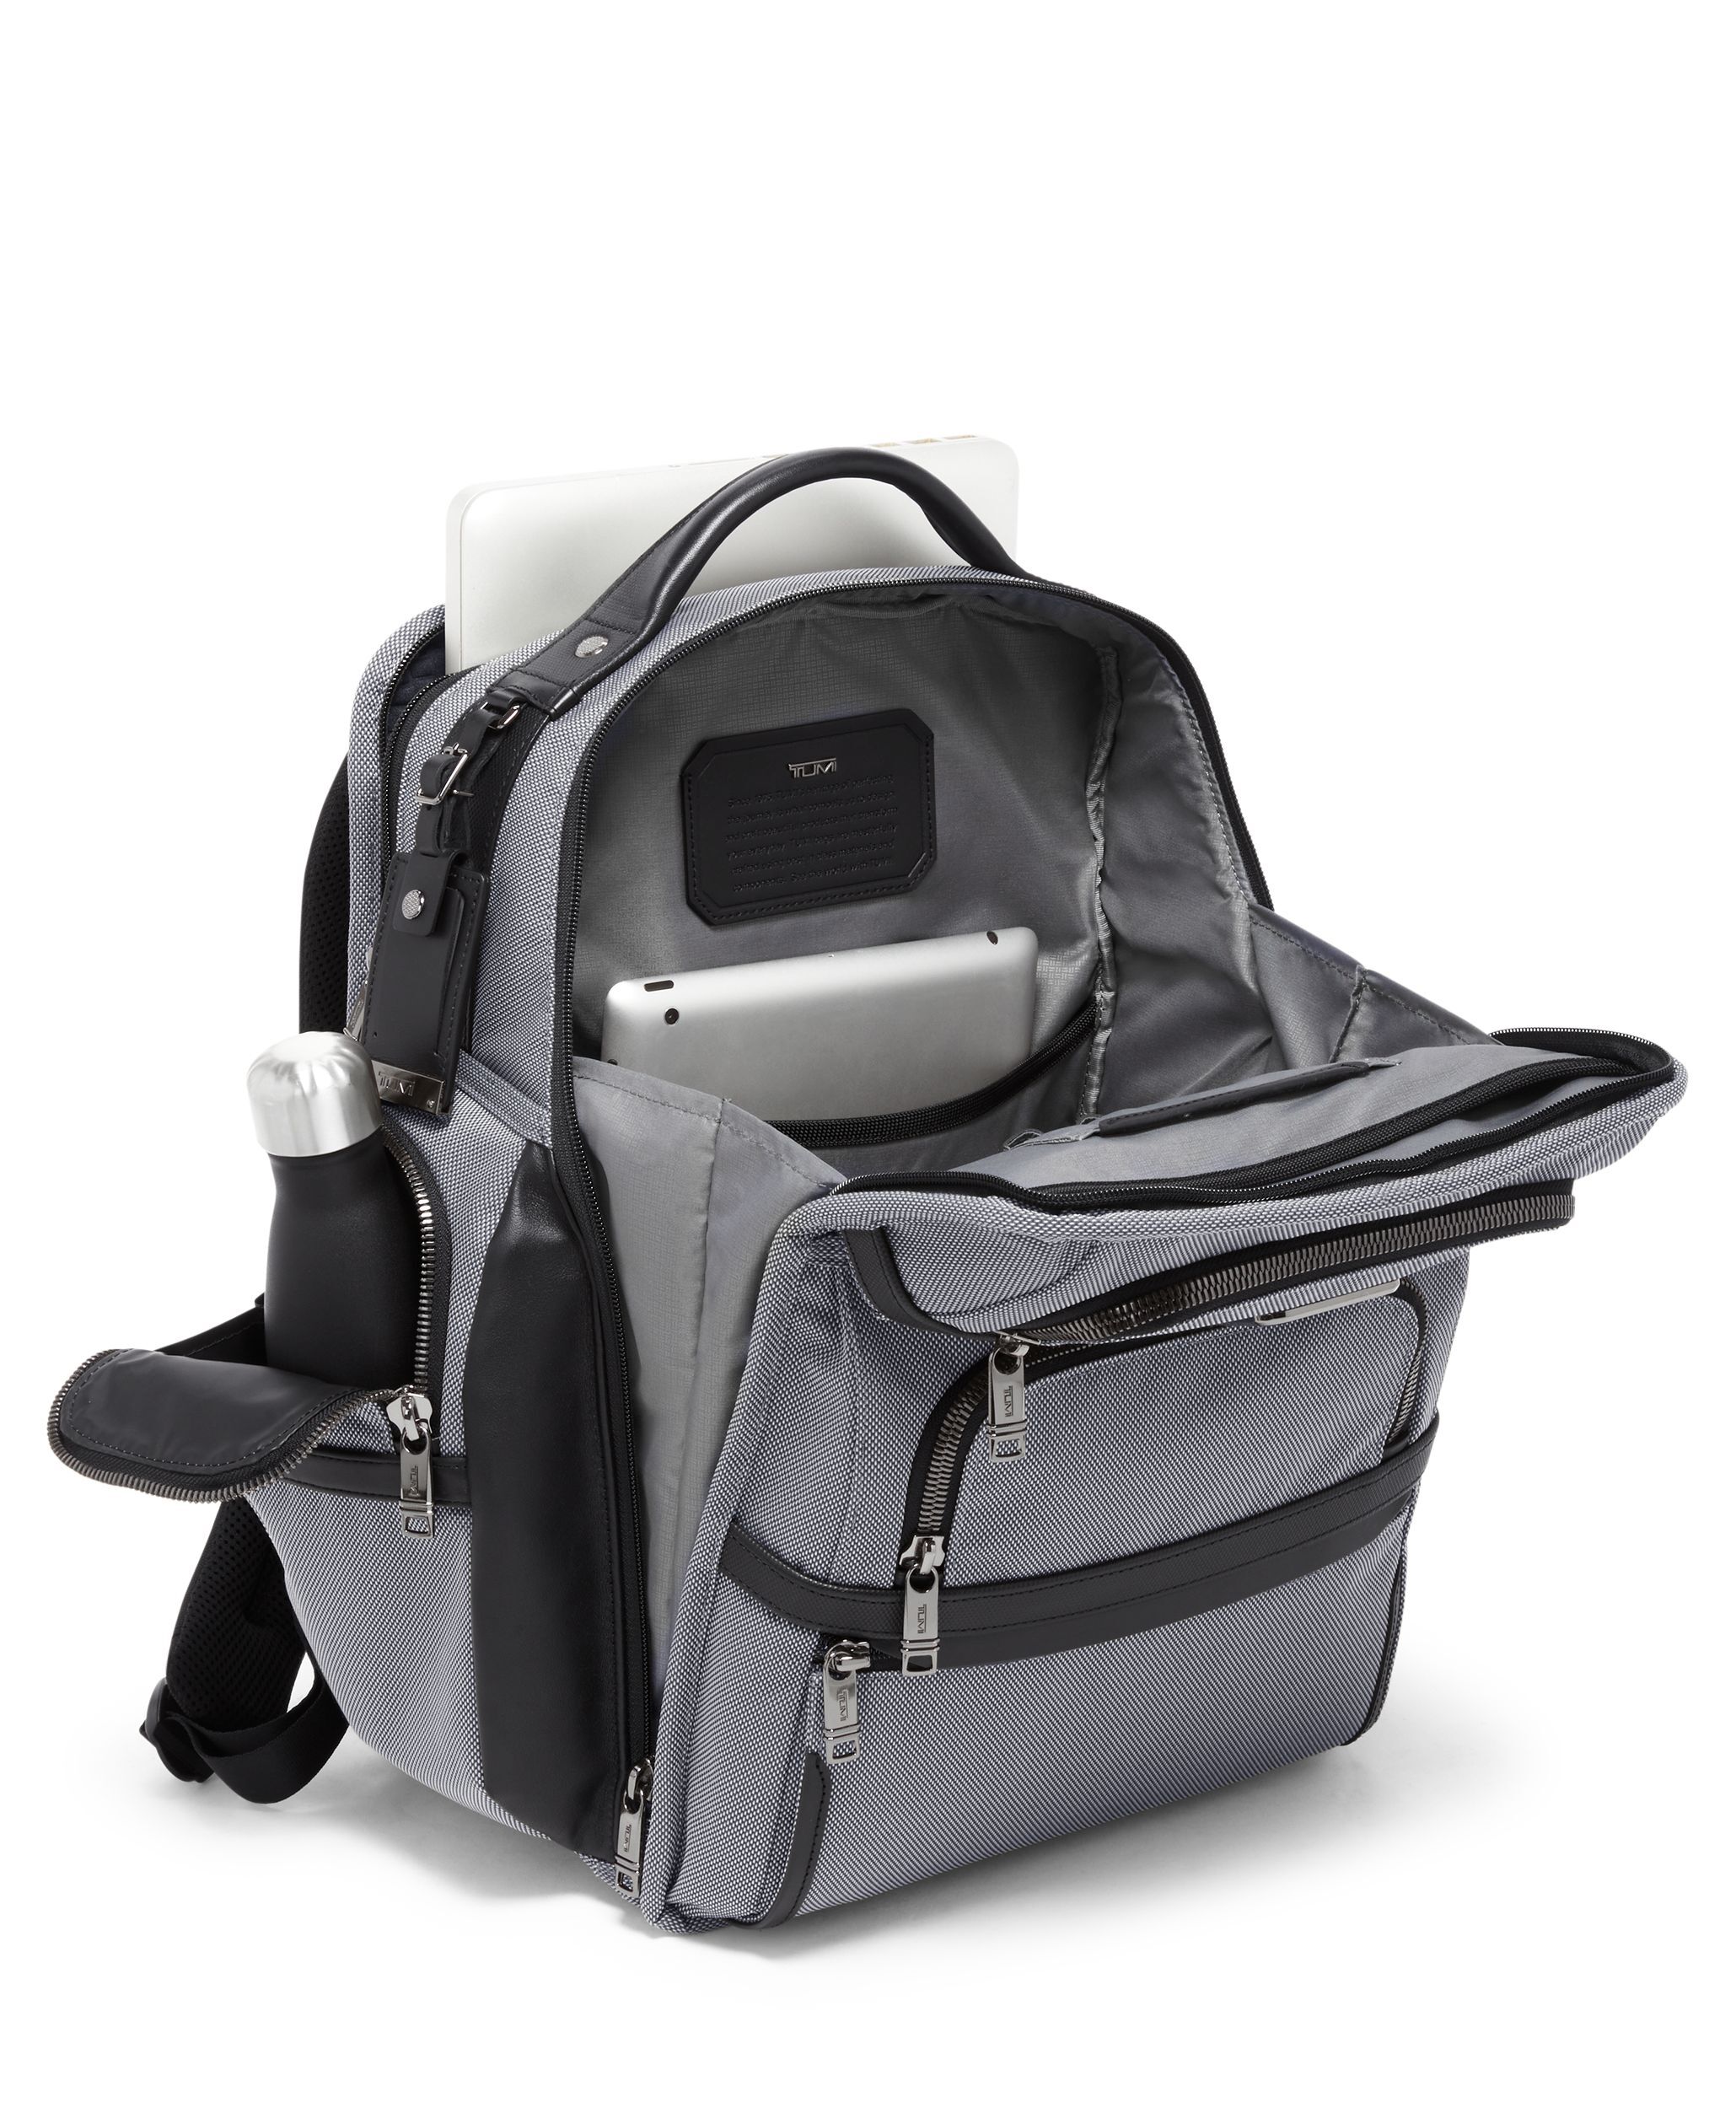 Shop Travel Backpacks: Wheeled Bags & Sports Bags | TUMI